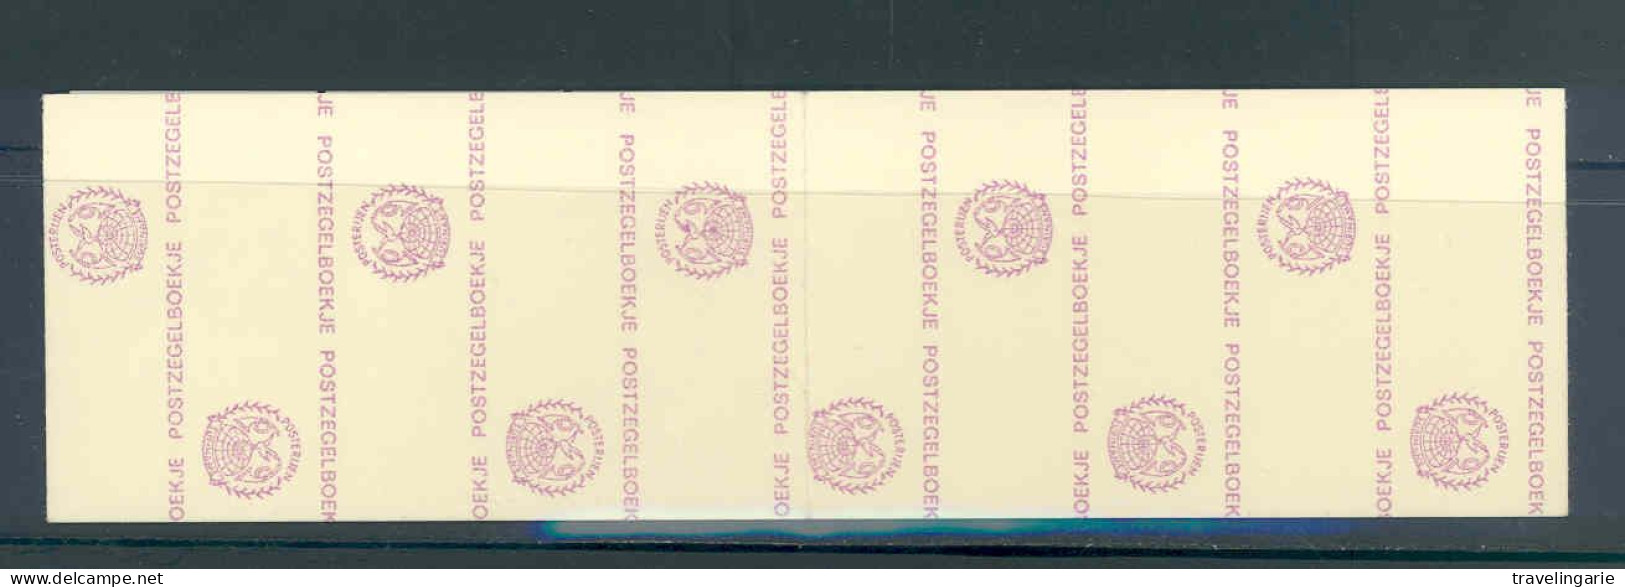 Suriname 1976 Airmail Stamp Booklet MNH/** - Surinam